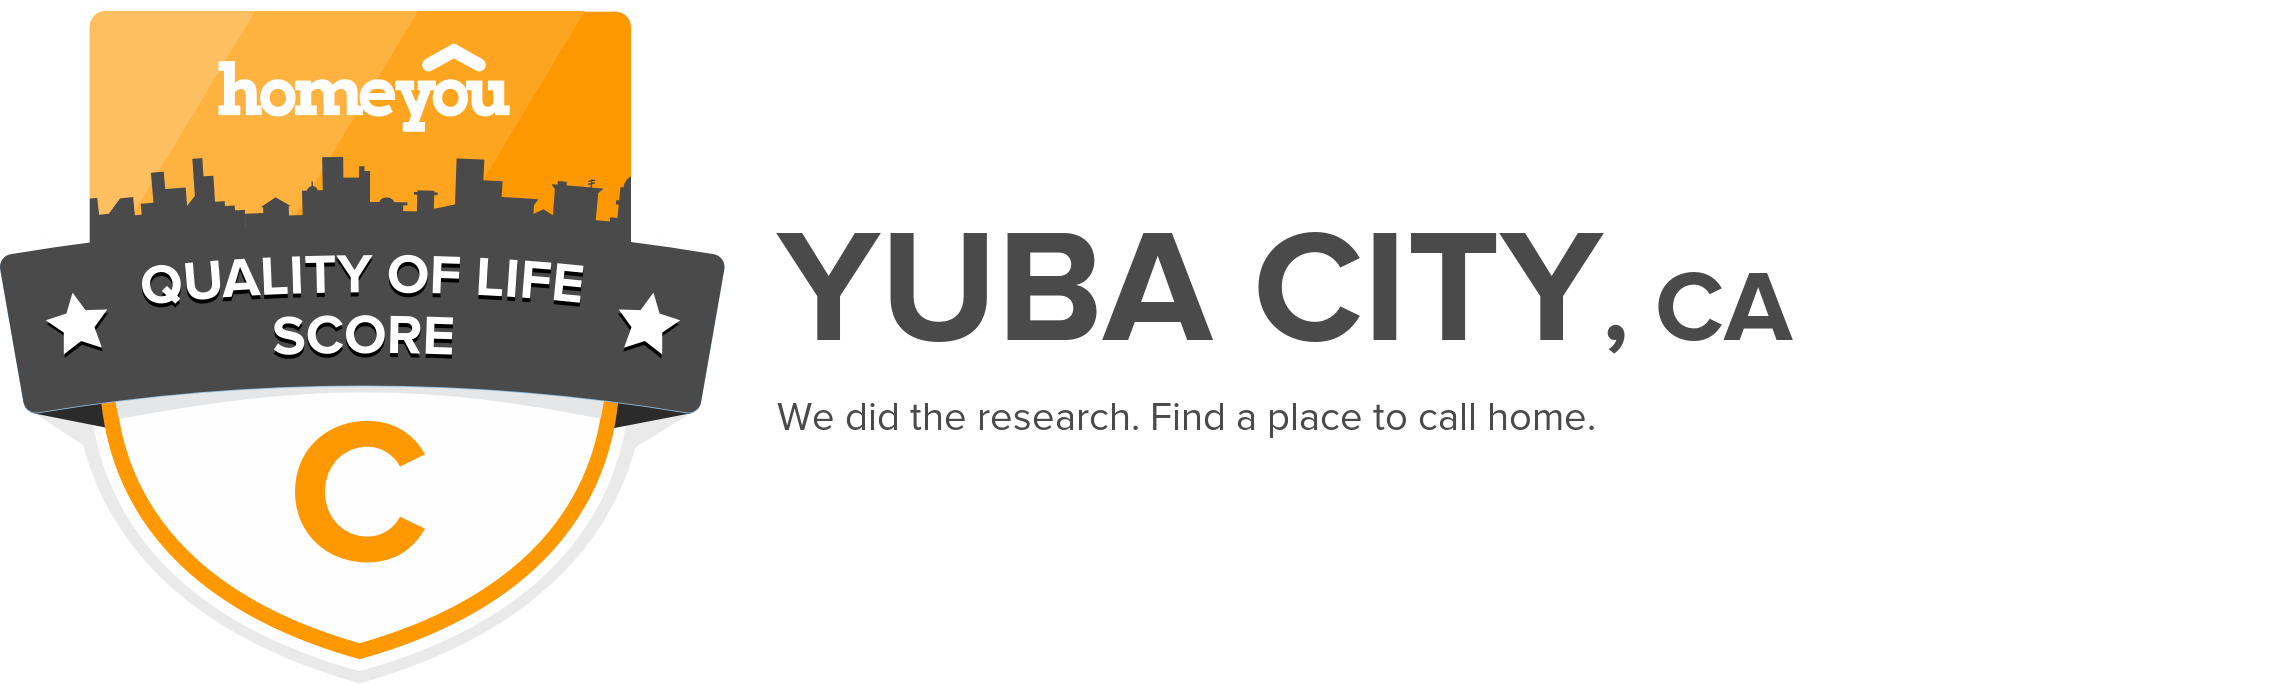 Yuba City, CA